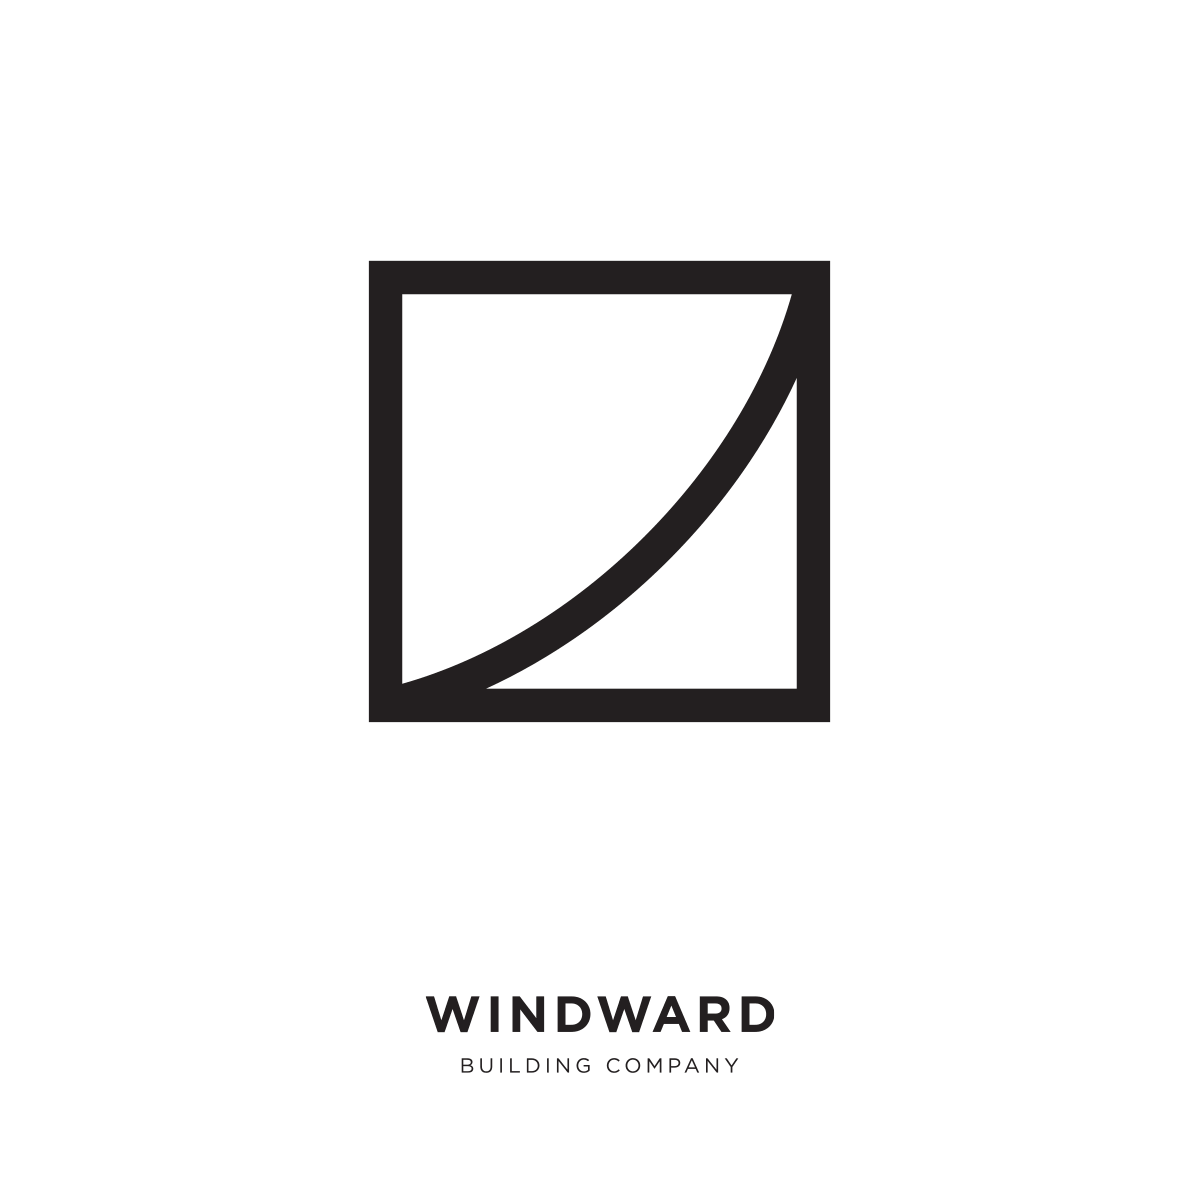 Windward Building Company logo concept v2